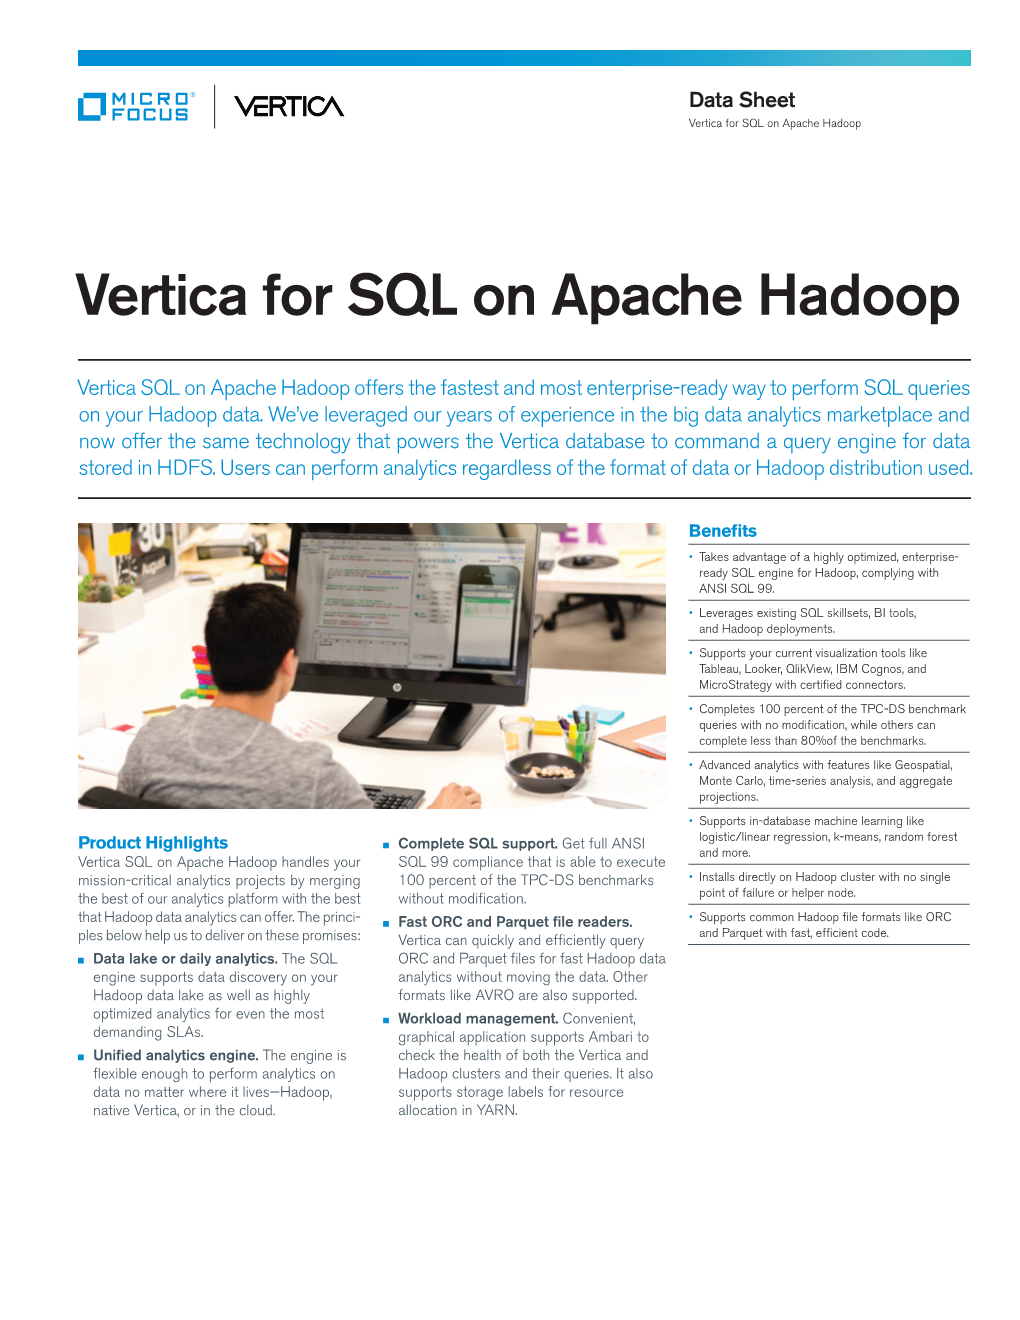 Vertica for SQL on Apache Hadoop